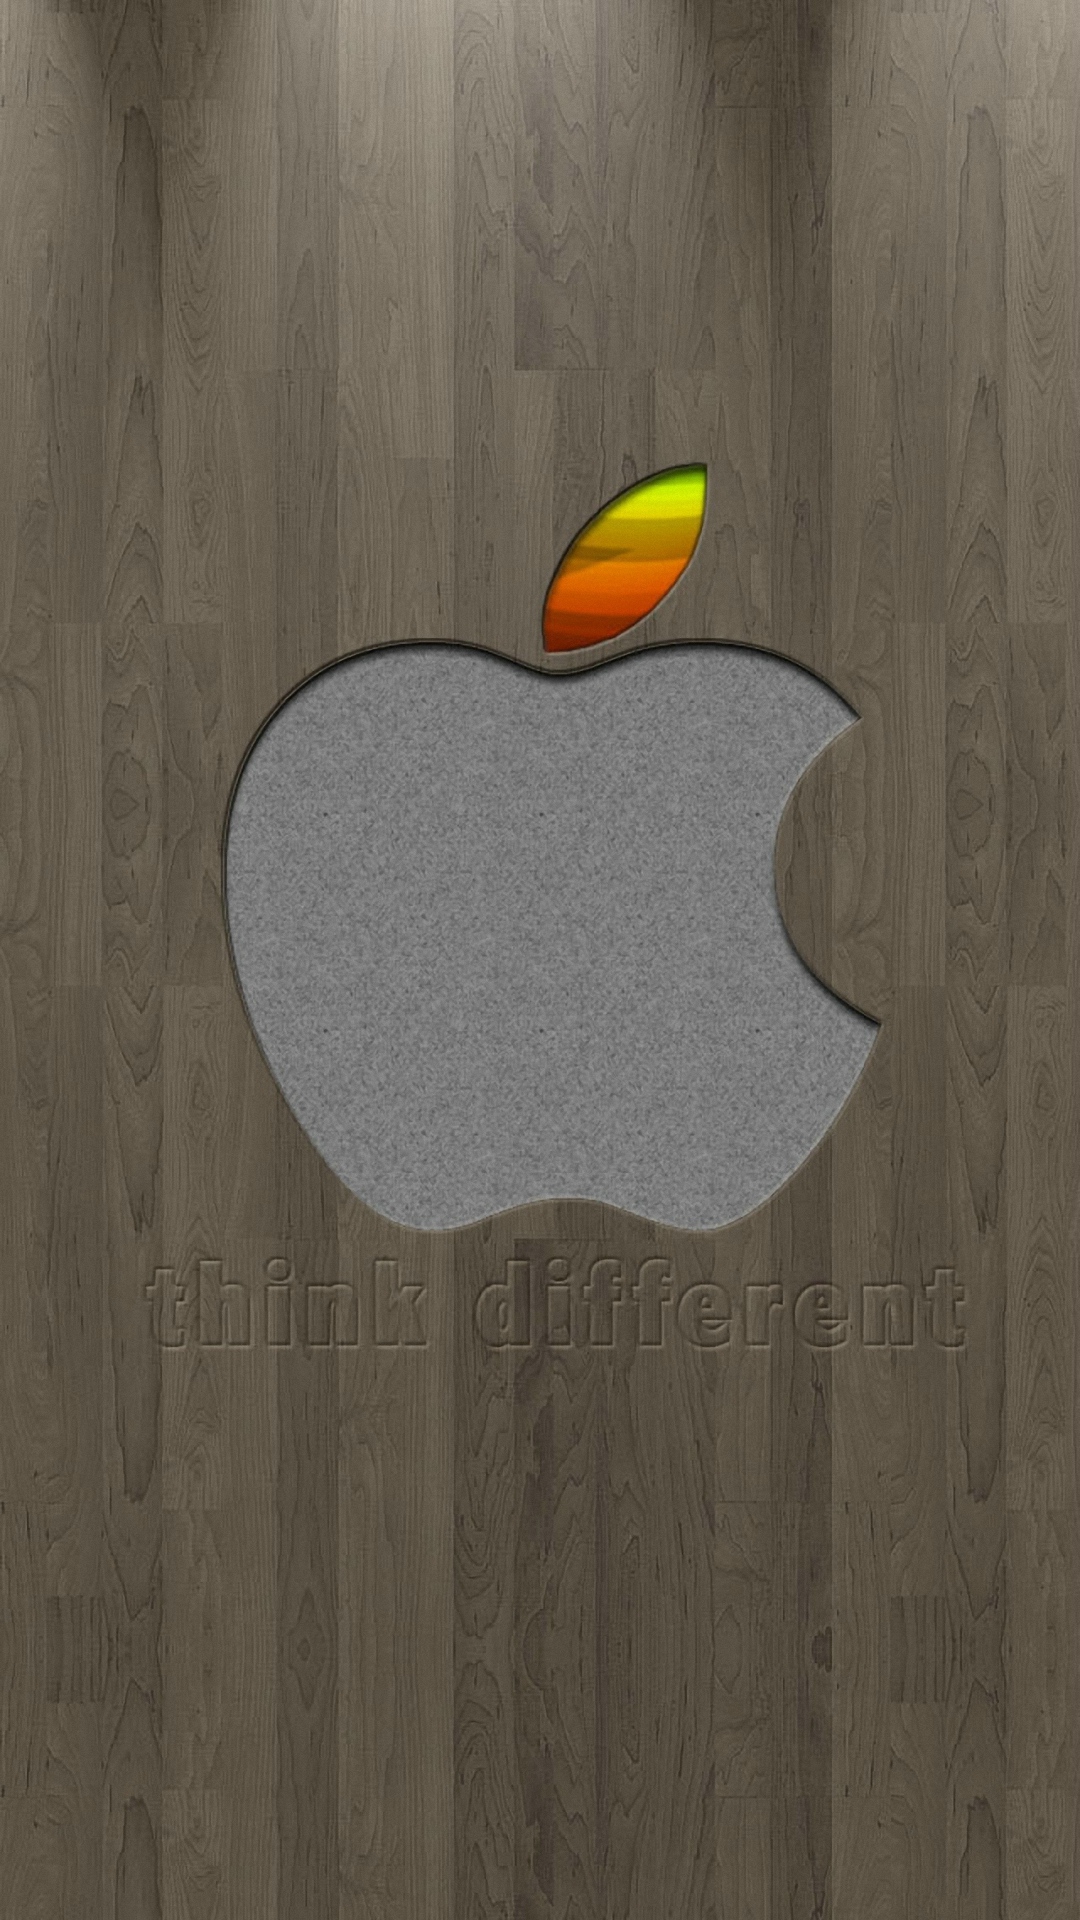 Apple Logo Hd Wallpaper For Iphone Pixelstalk Net